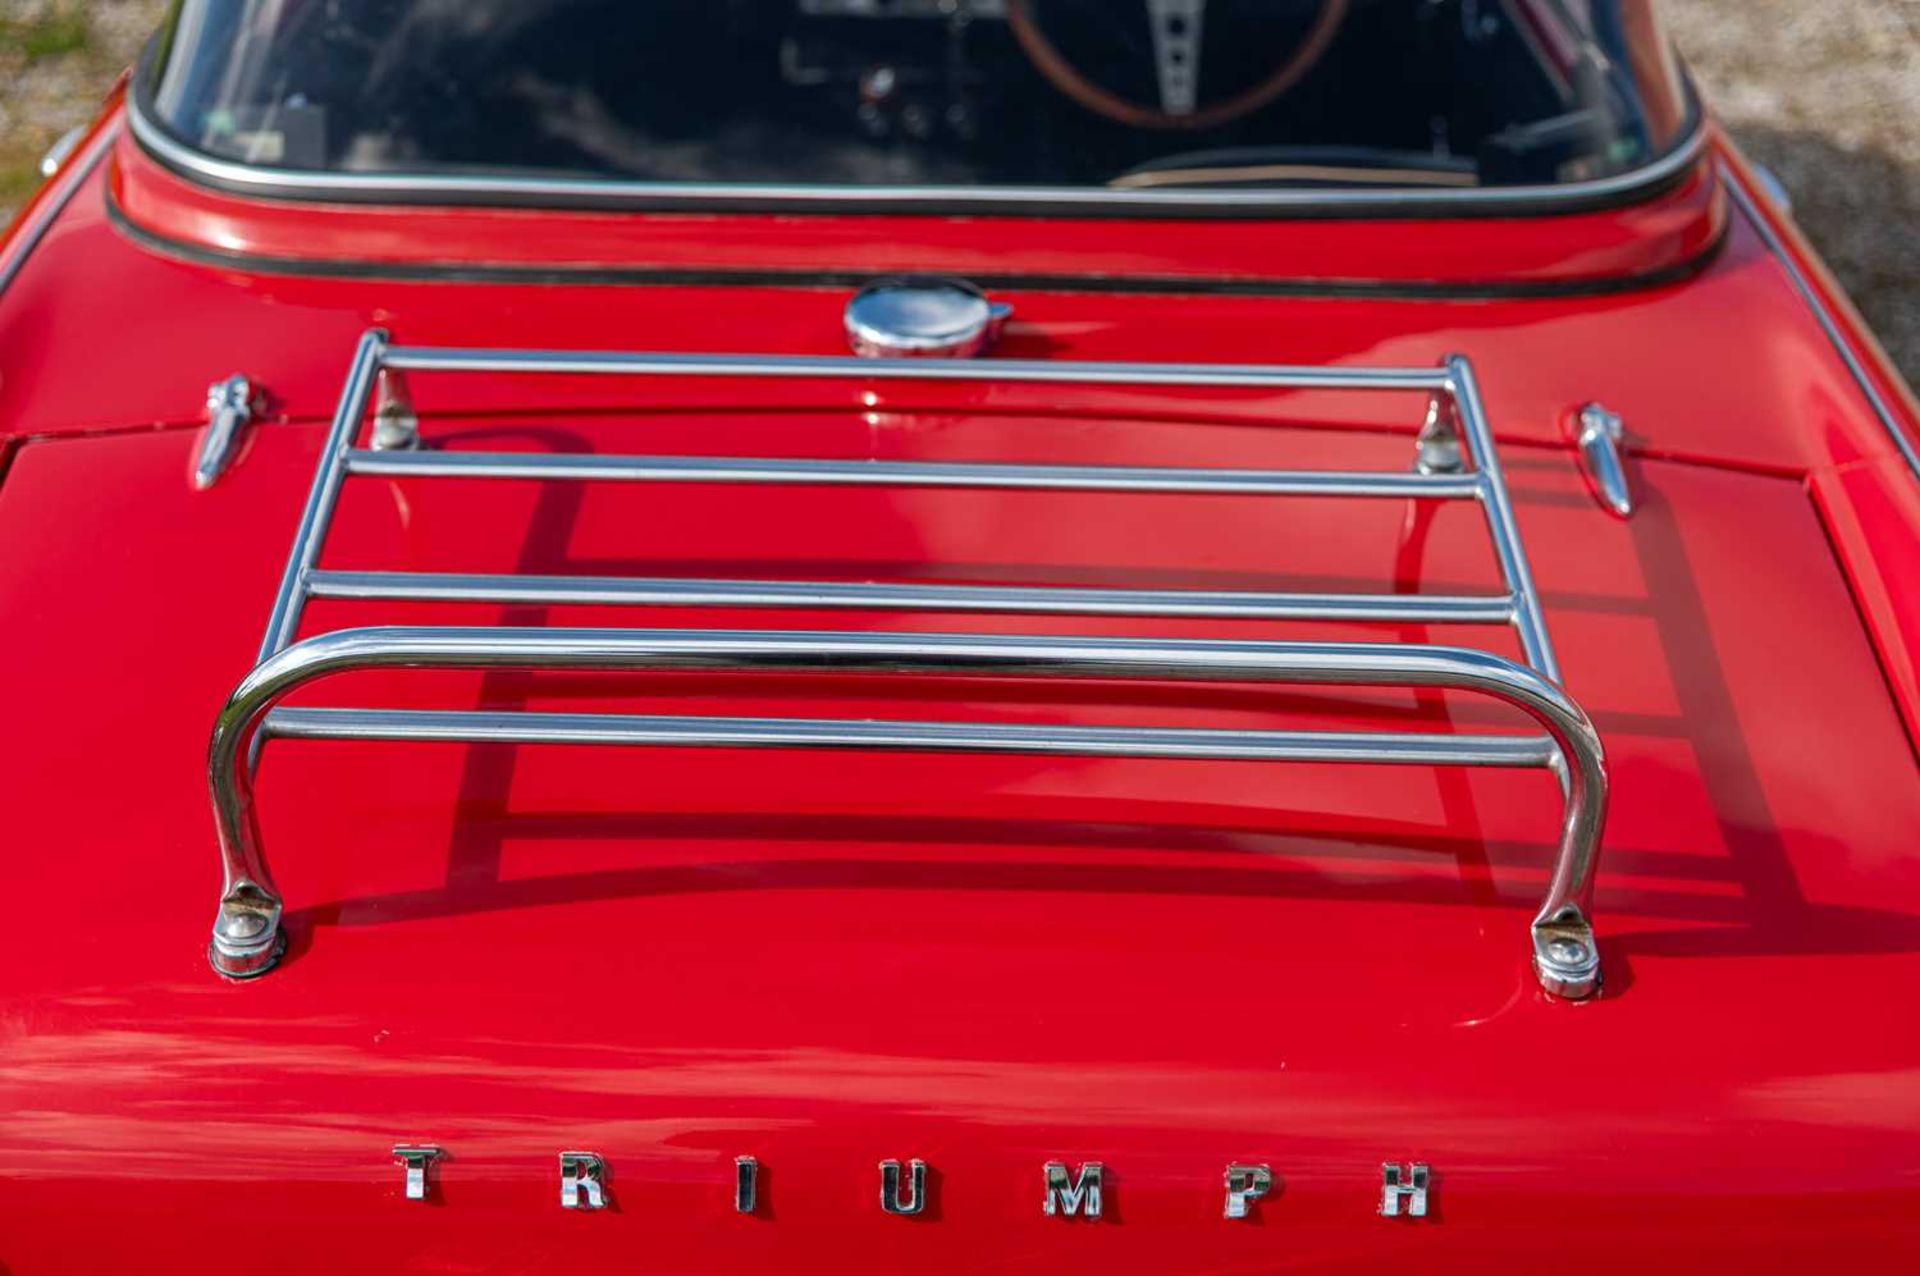 1962 Triumph TR4 - Image 38 of 72